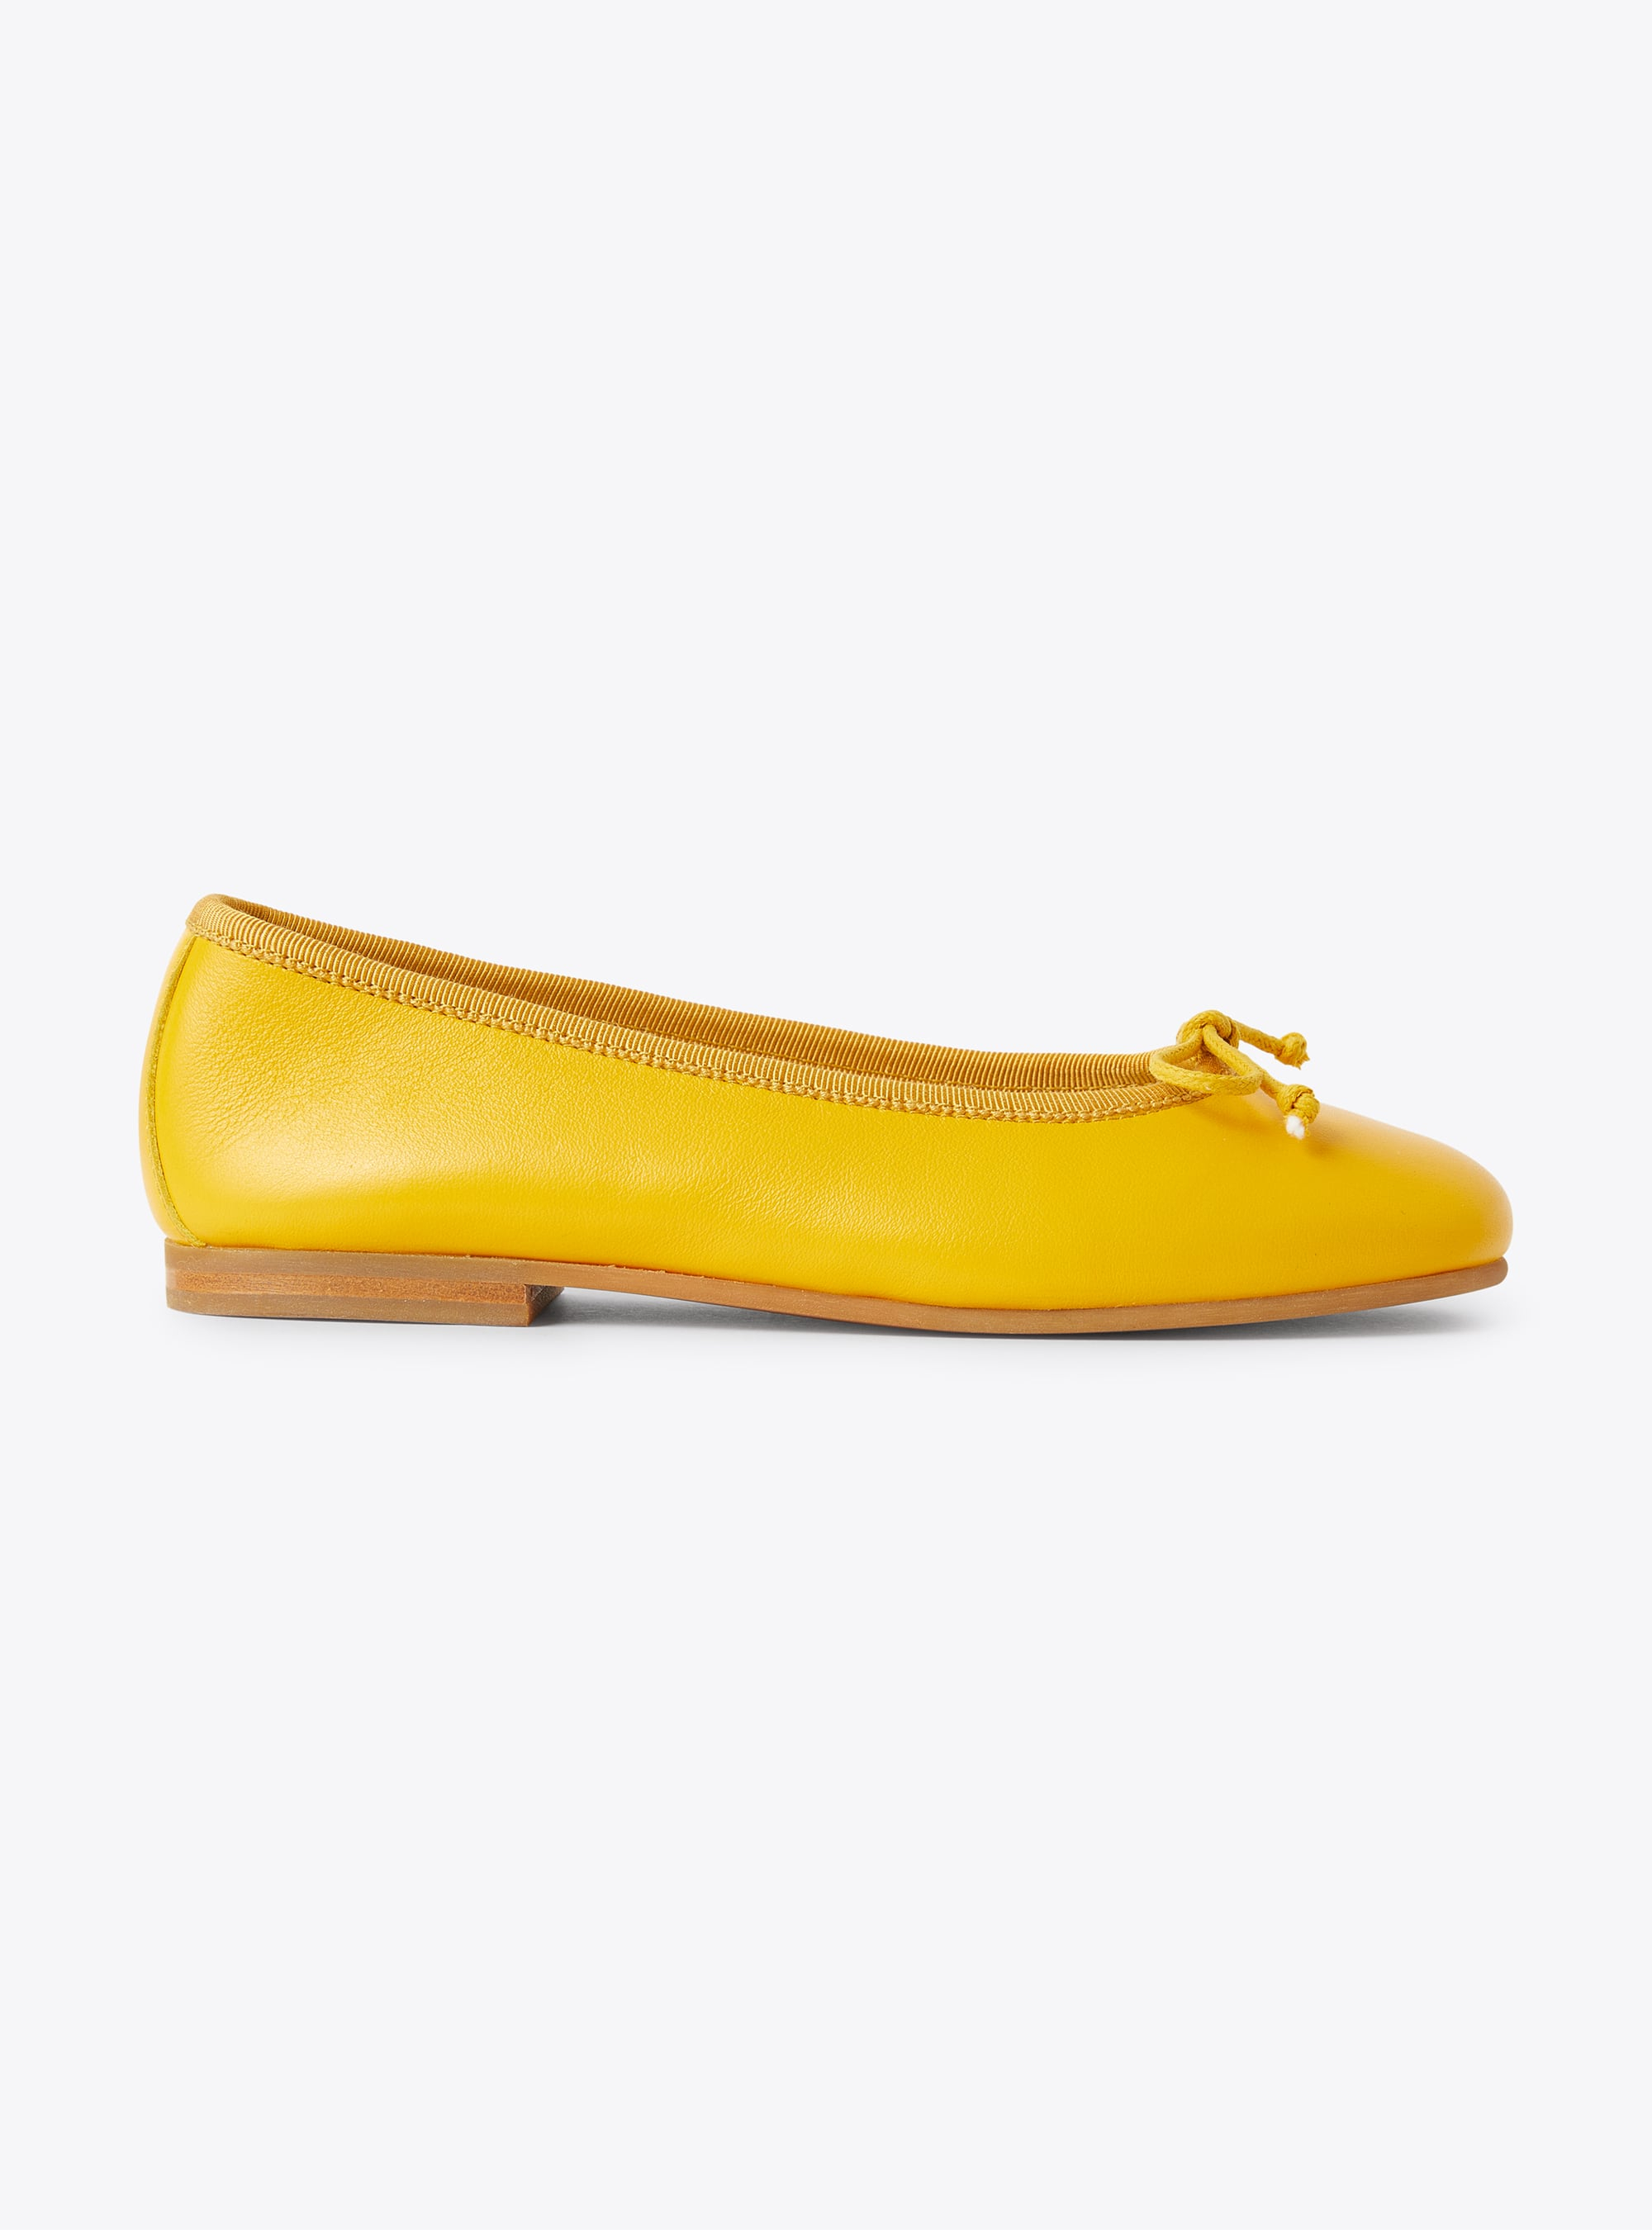 Ballet flat in plain sunshine-yellow leather - Yellow | Il Gufo